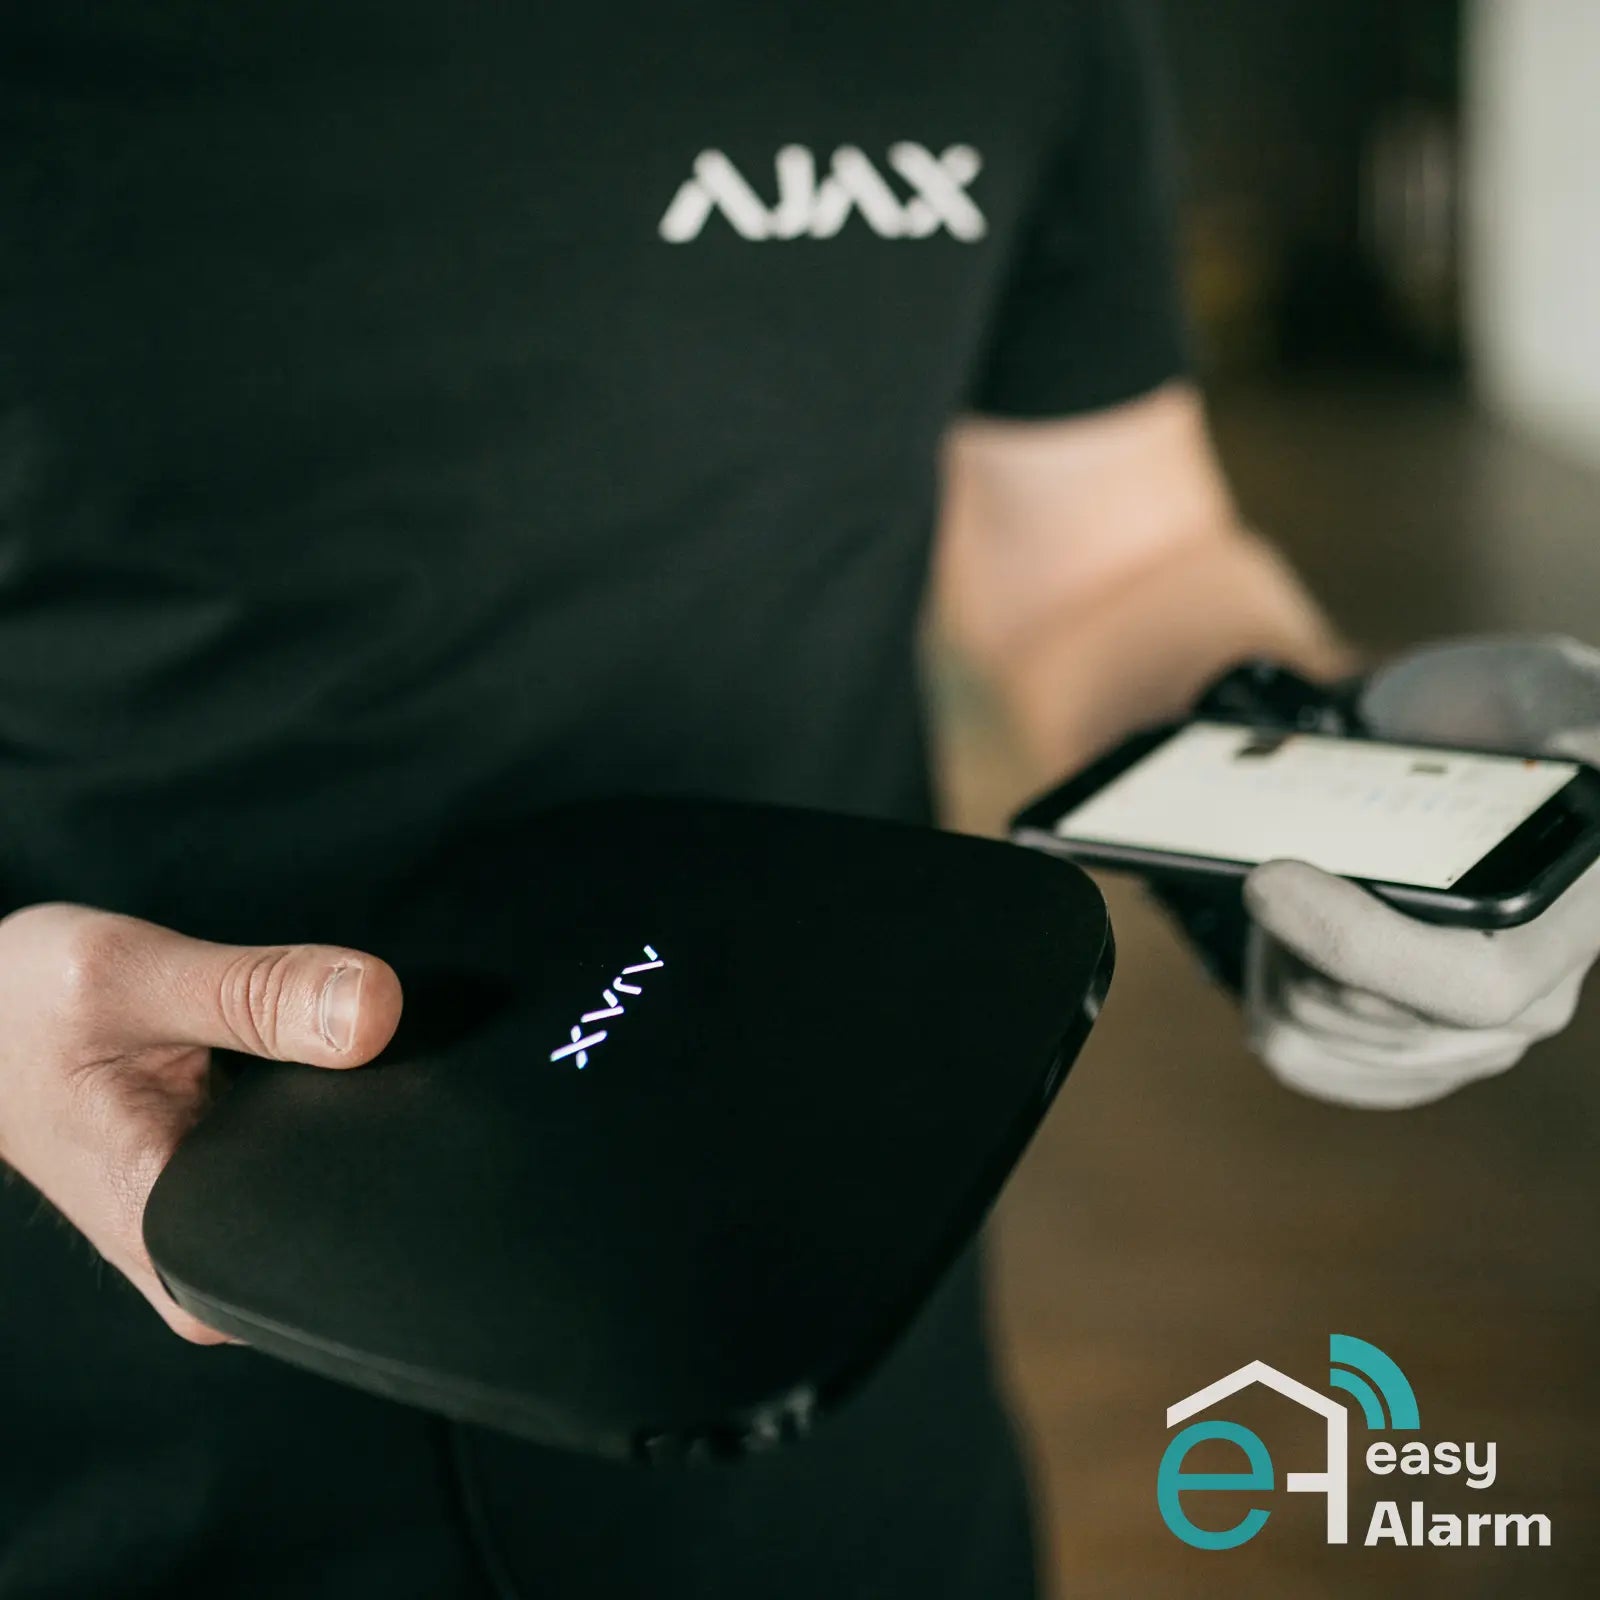 un professionista Ajax ha in mano uno smartphone e un hub ajax con logo di Easy Alarm